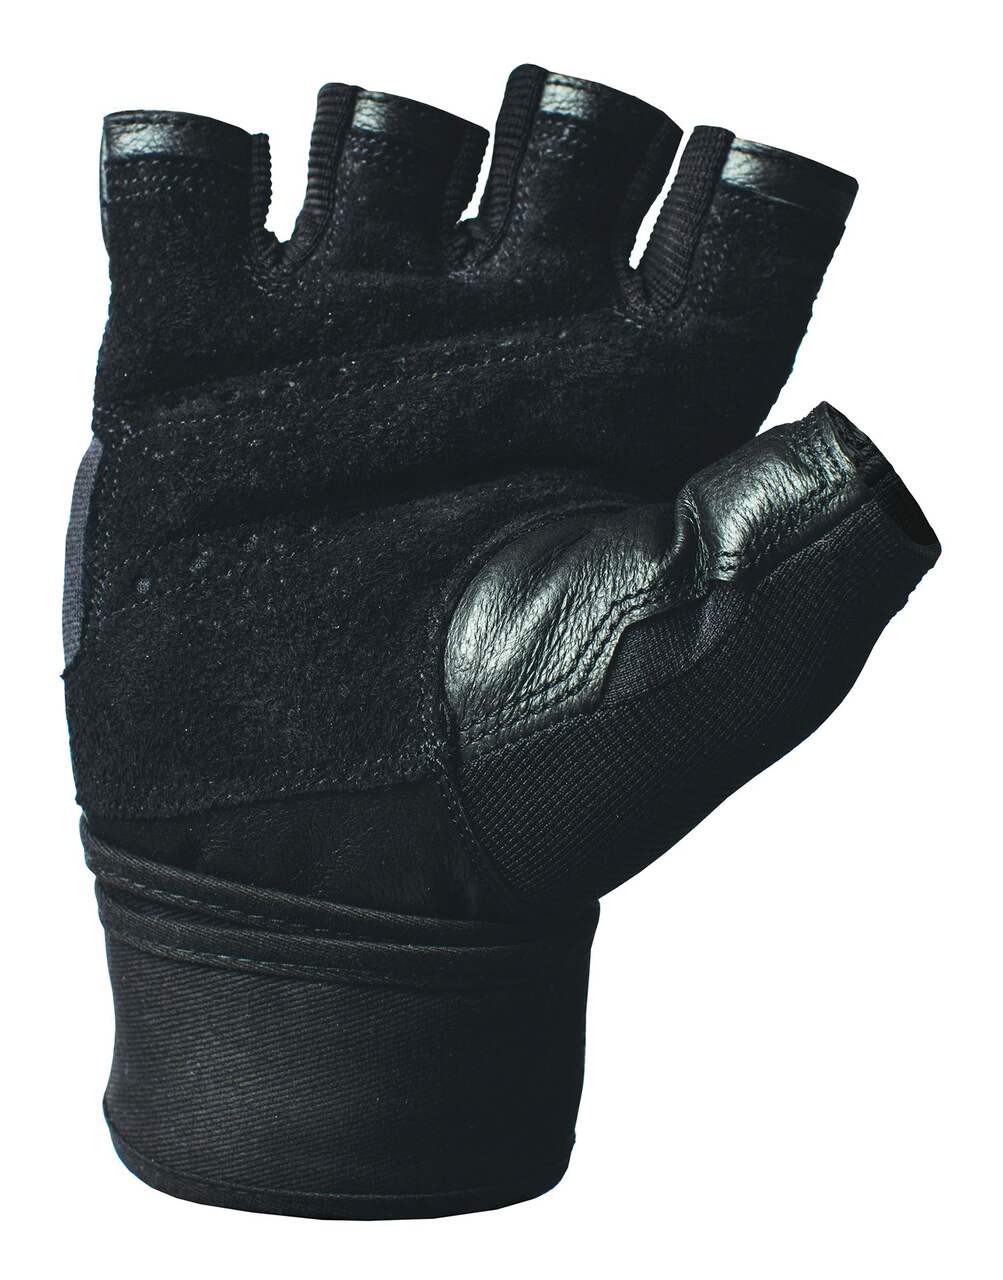 Premium Weightlifting Gym Gloves  Improve Your Grip & Performance